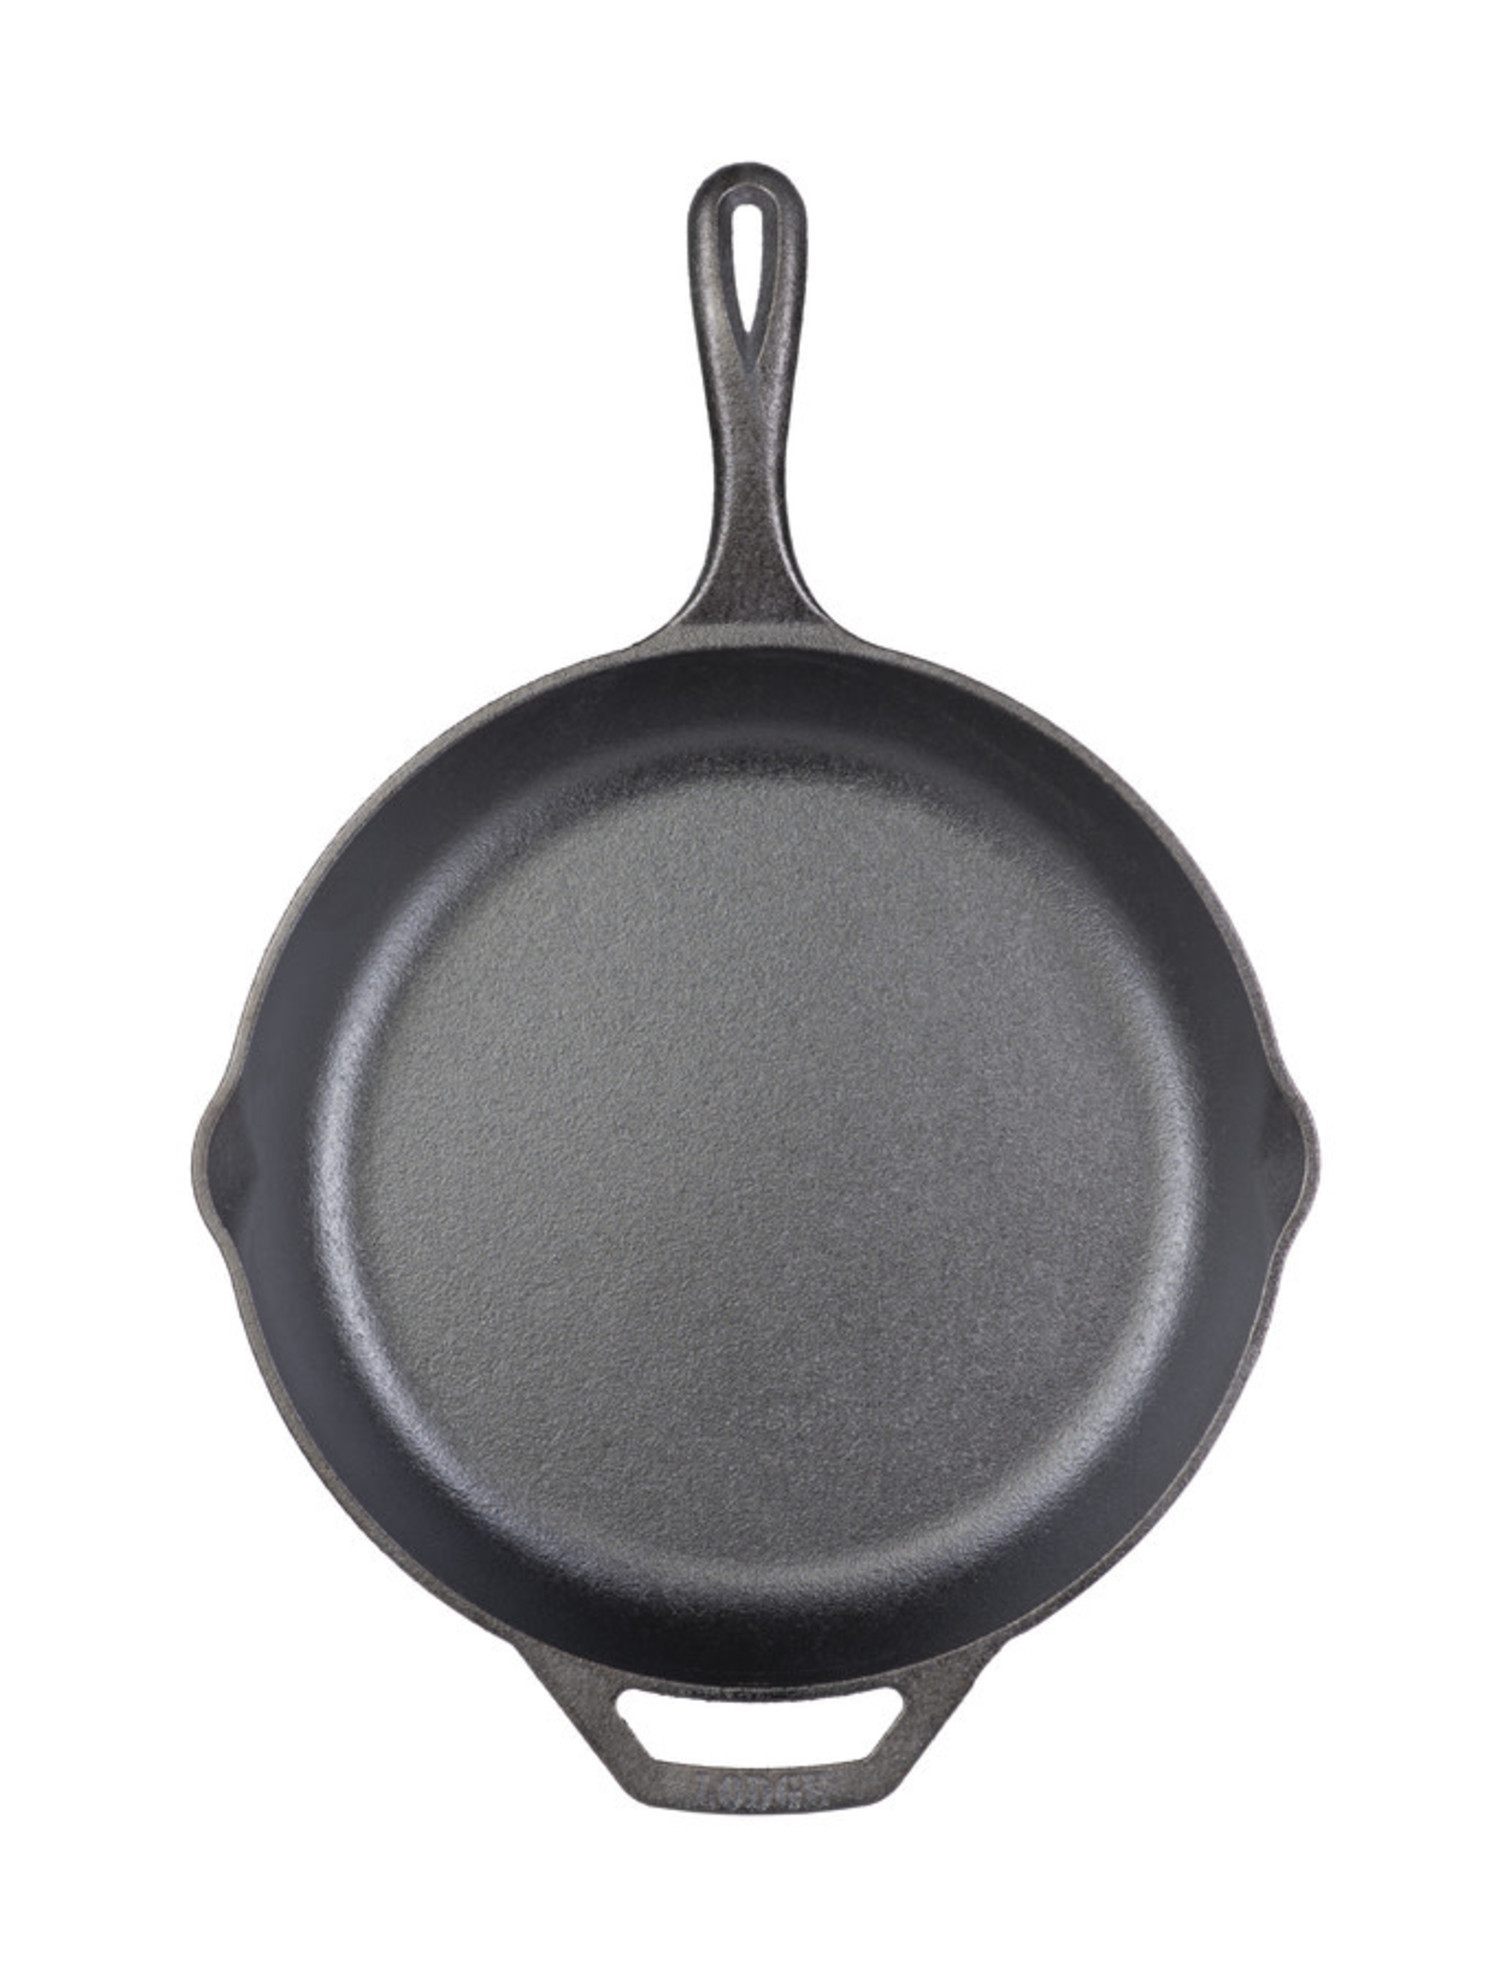 Lodge Seasoned Cast Iron Skillet - 12 Inch Ergonomic Frying Pan with Assist  Handle, black